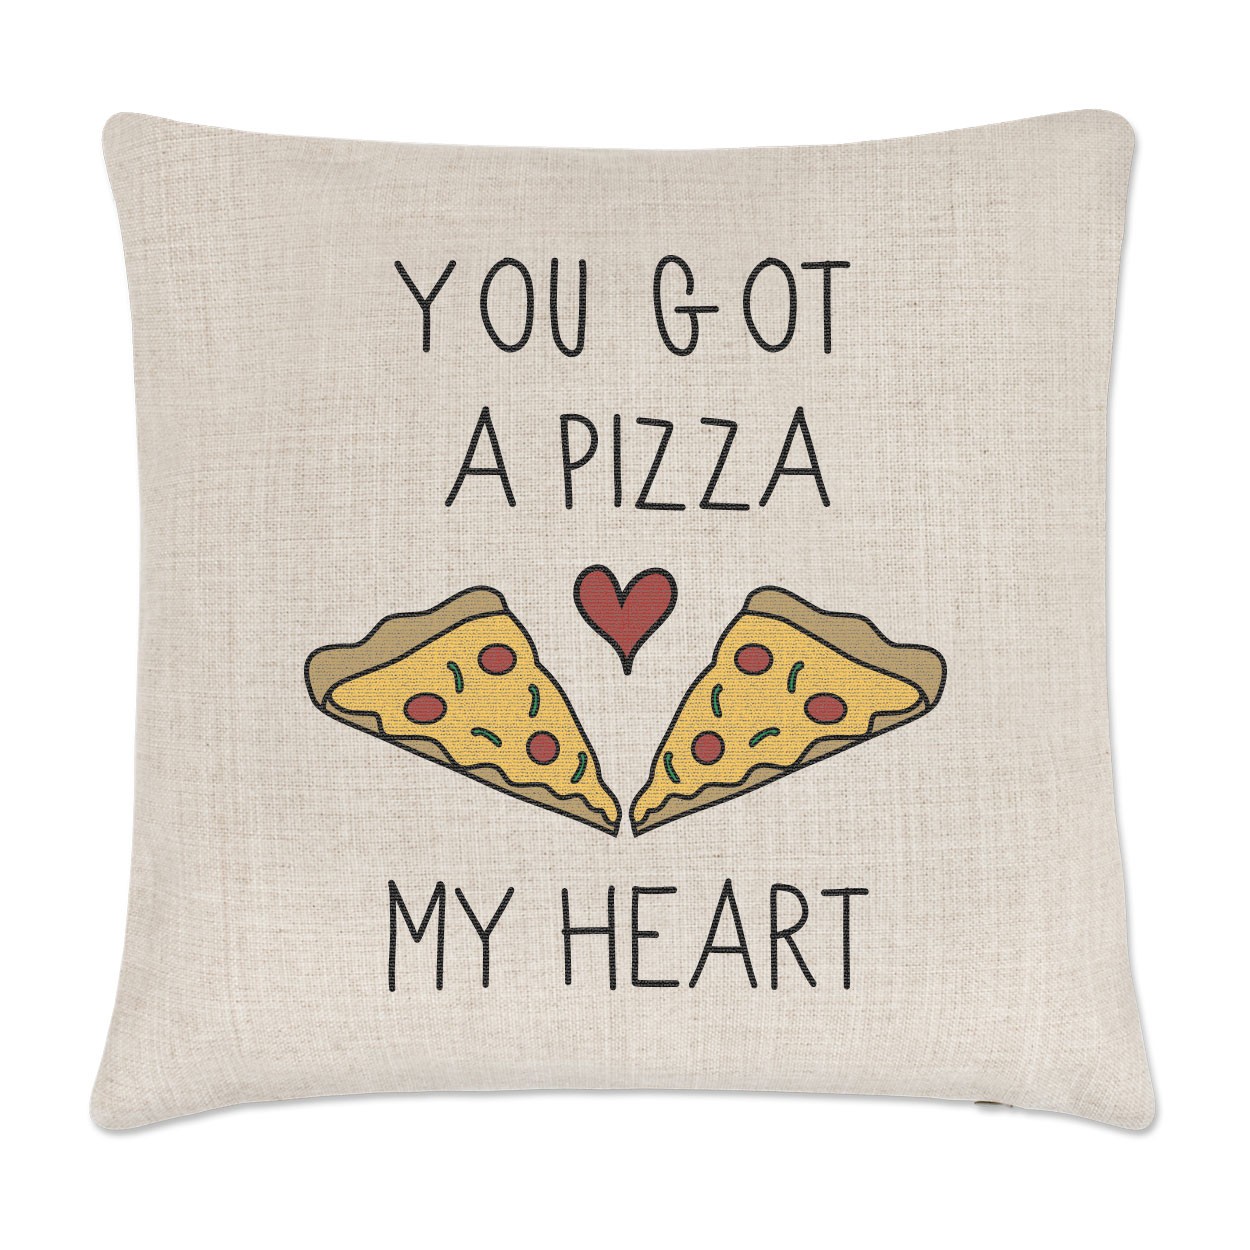 You Got A Pizza My Heart Linen Cushion Cover